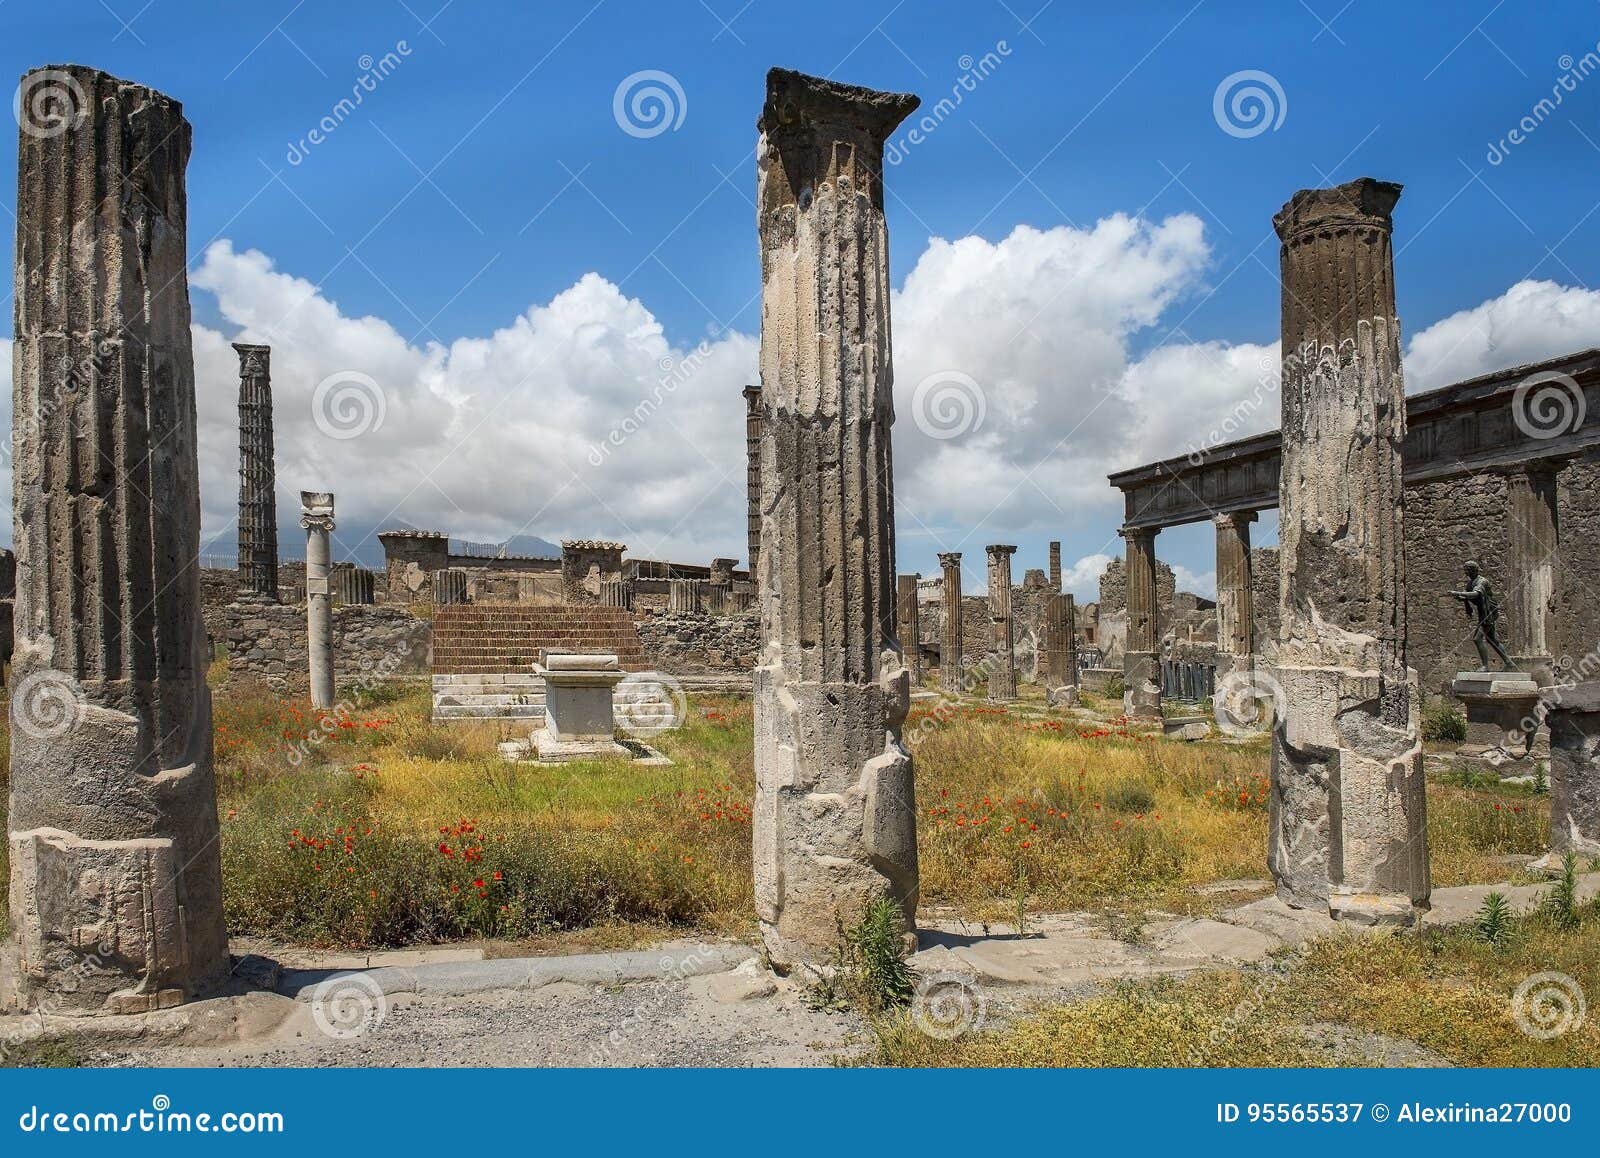 pompeii ruins, unesco world heritage site, campania region, italy